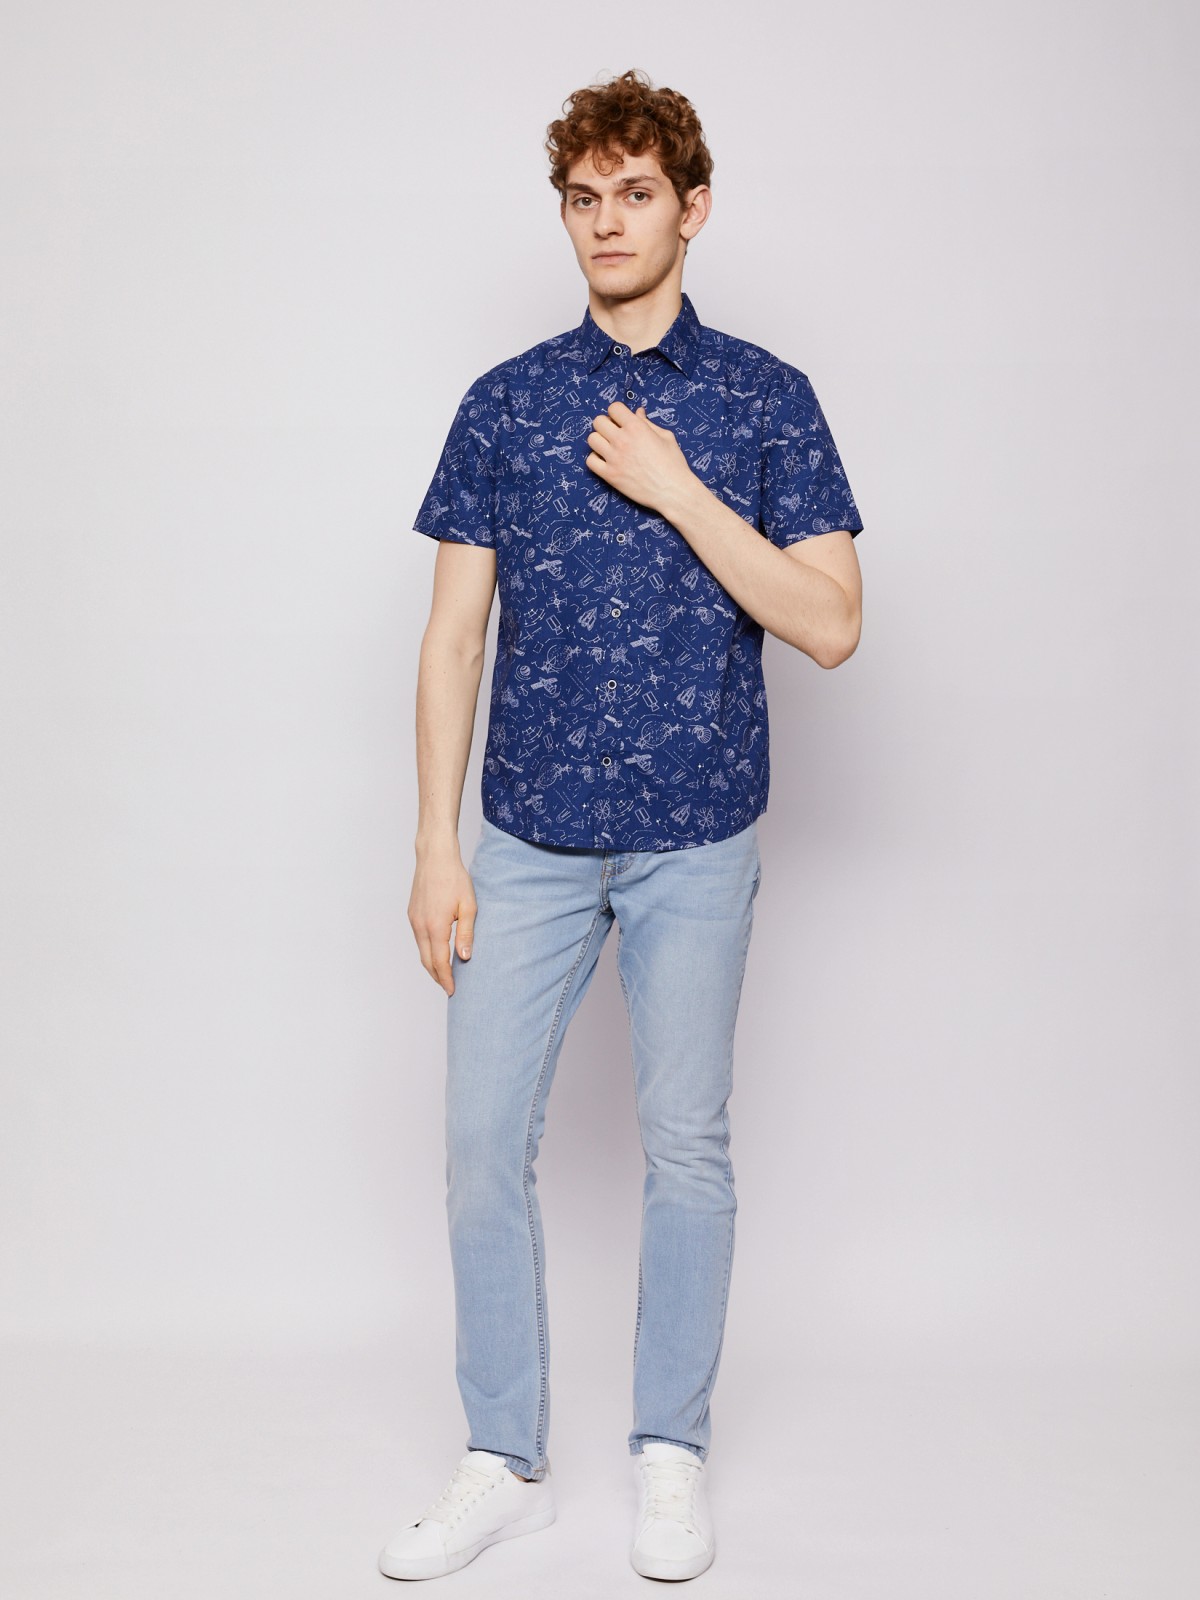 Хлопковая рубашка с короткими рукавами zolla 211232259031, цвет темно-синий, размер M - фото 1